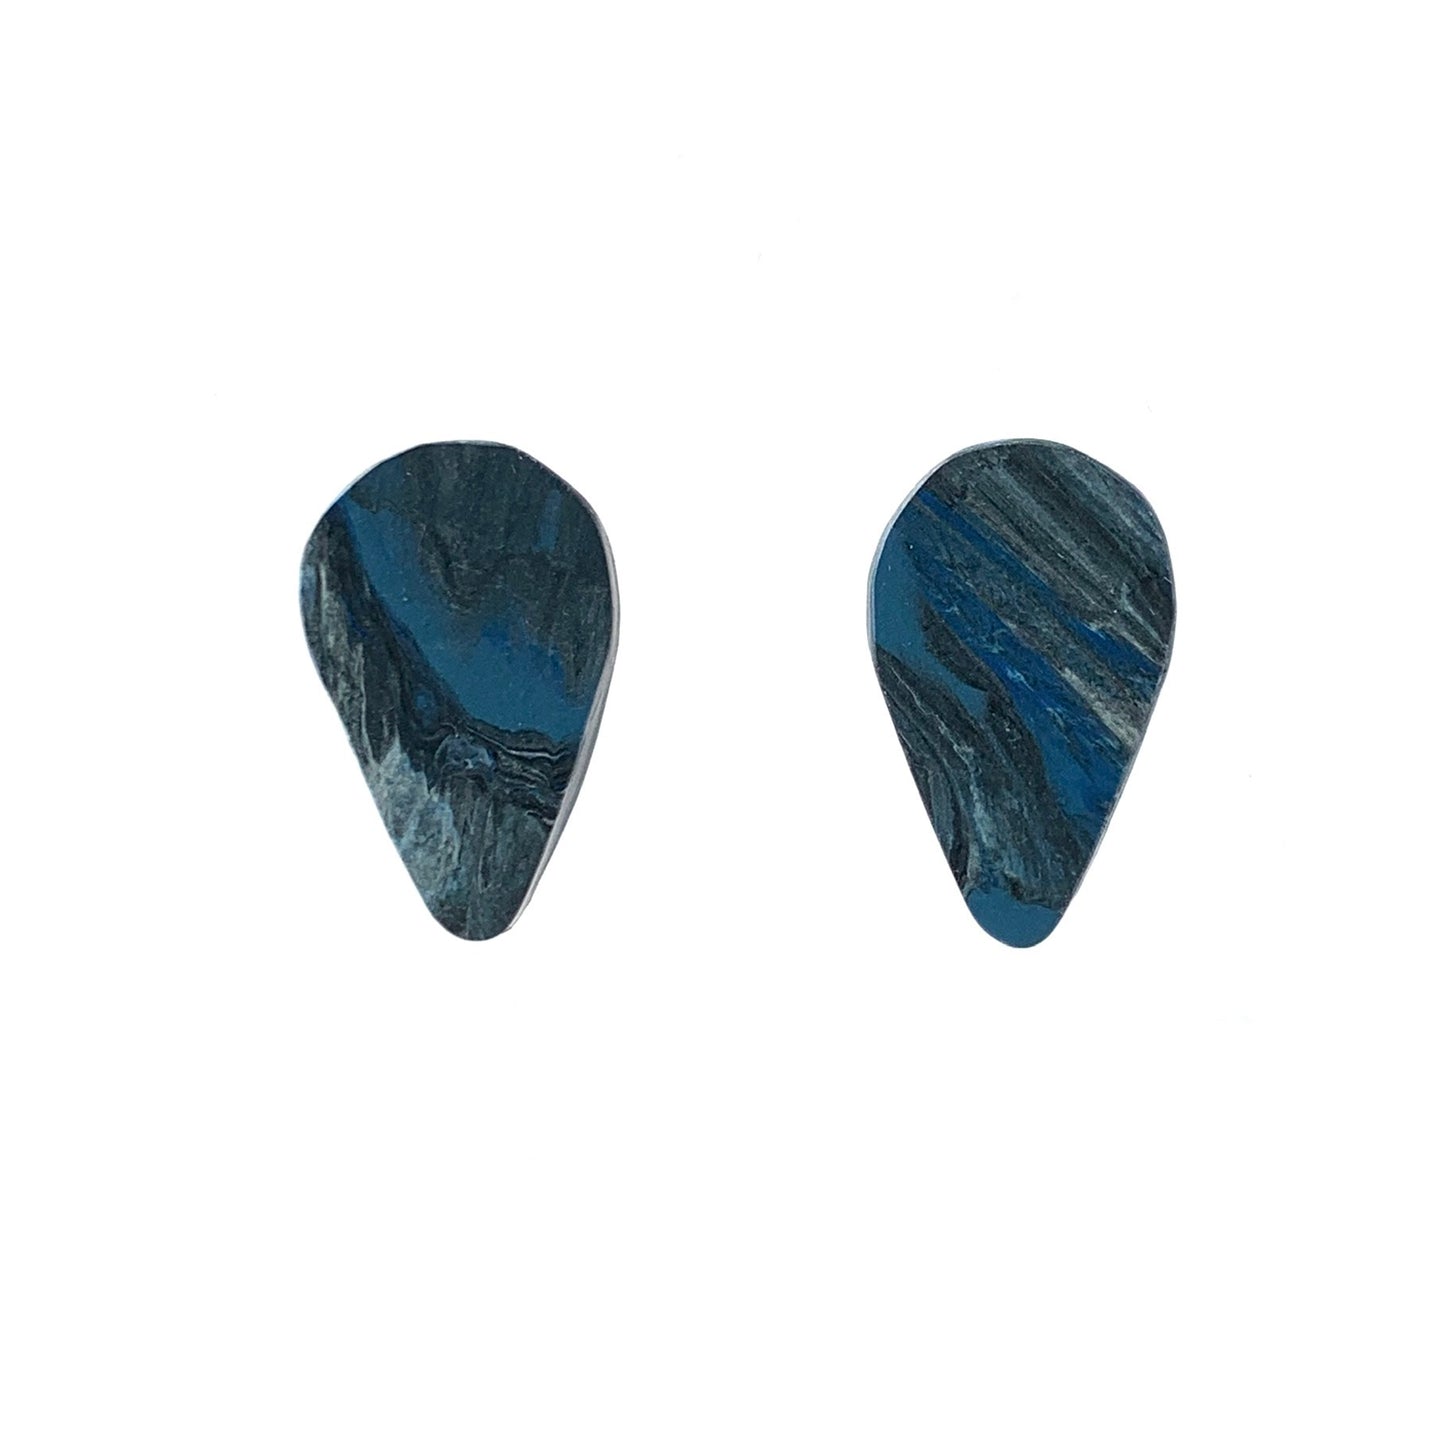 Sustainable Handmade earrings Navy blue studs teardrop eco jewellery recycled plastic 